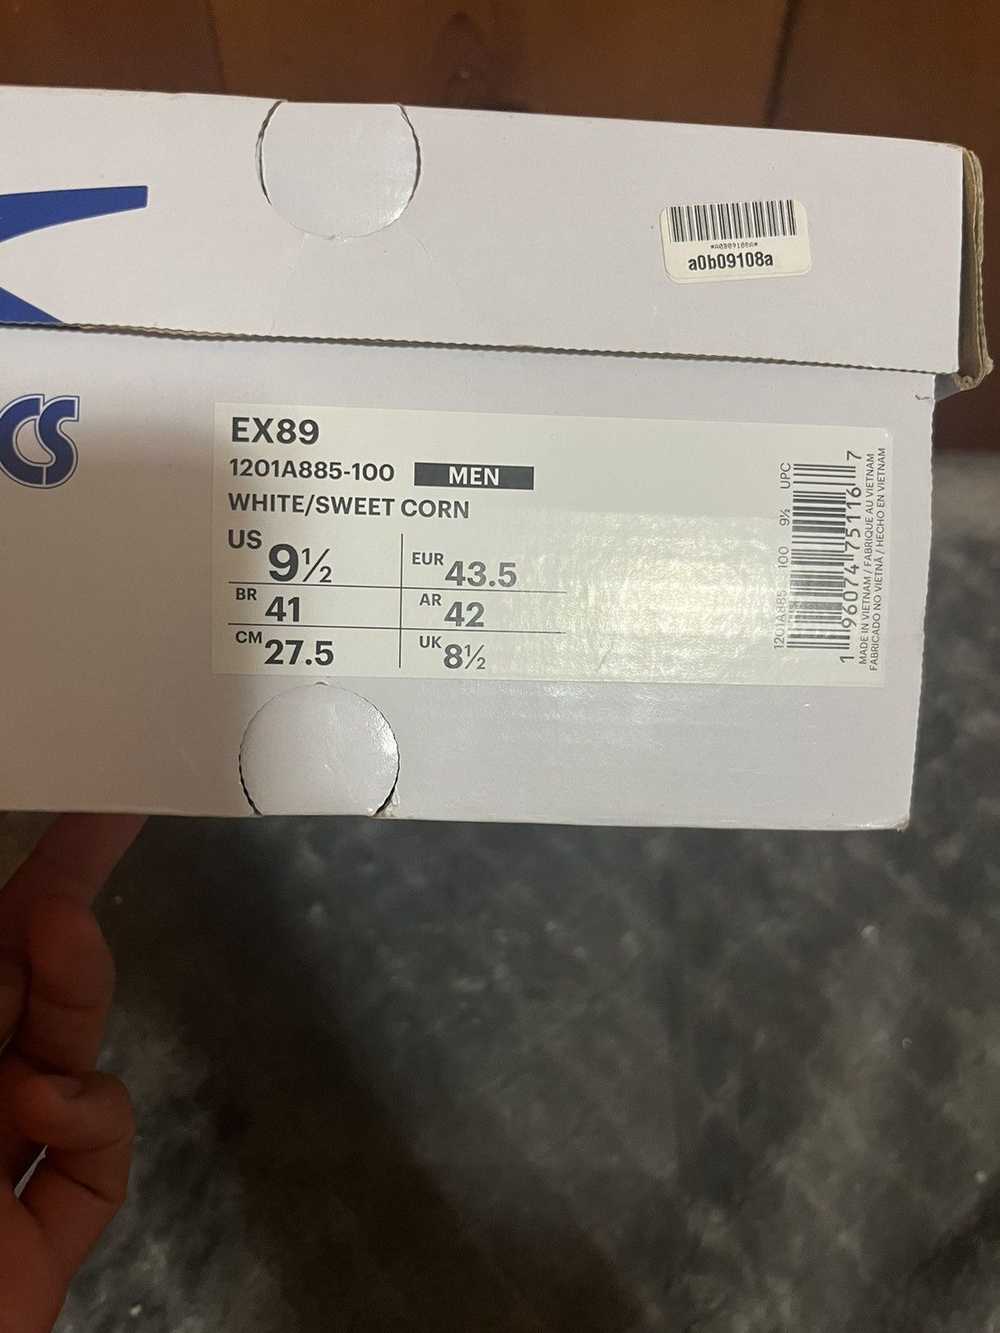 Asics × Kith Asics EX89 x Kith in White/Sweet Corn - image 9